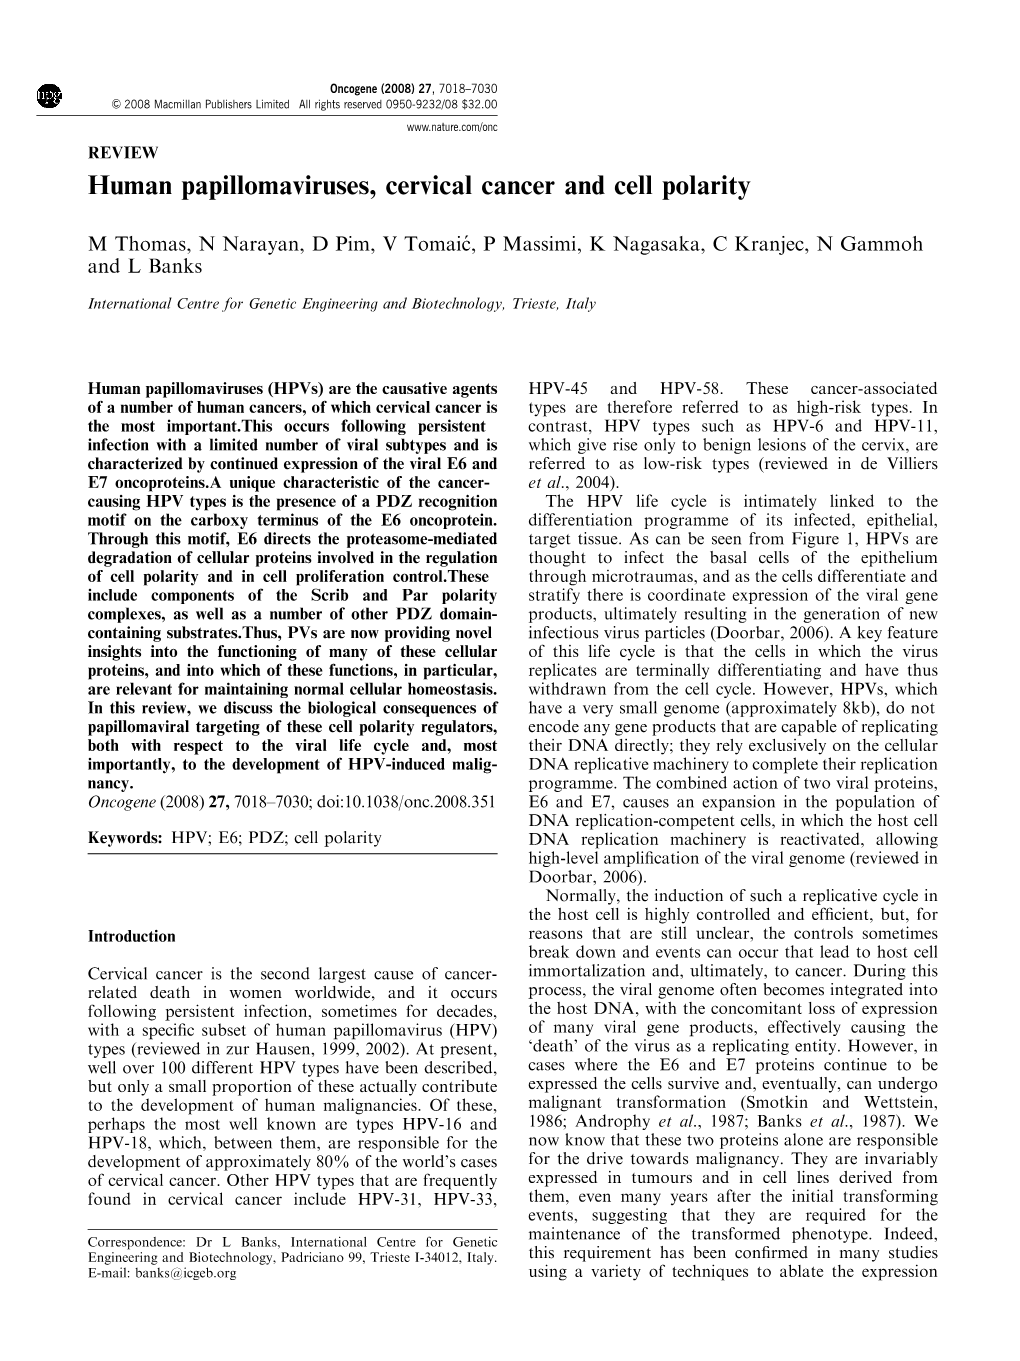 Human Papillomaviruses, Cervical Cancer and Cell Polarity